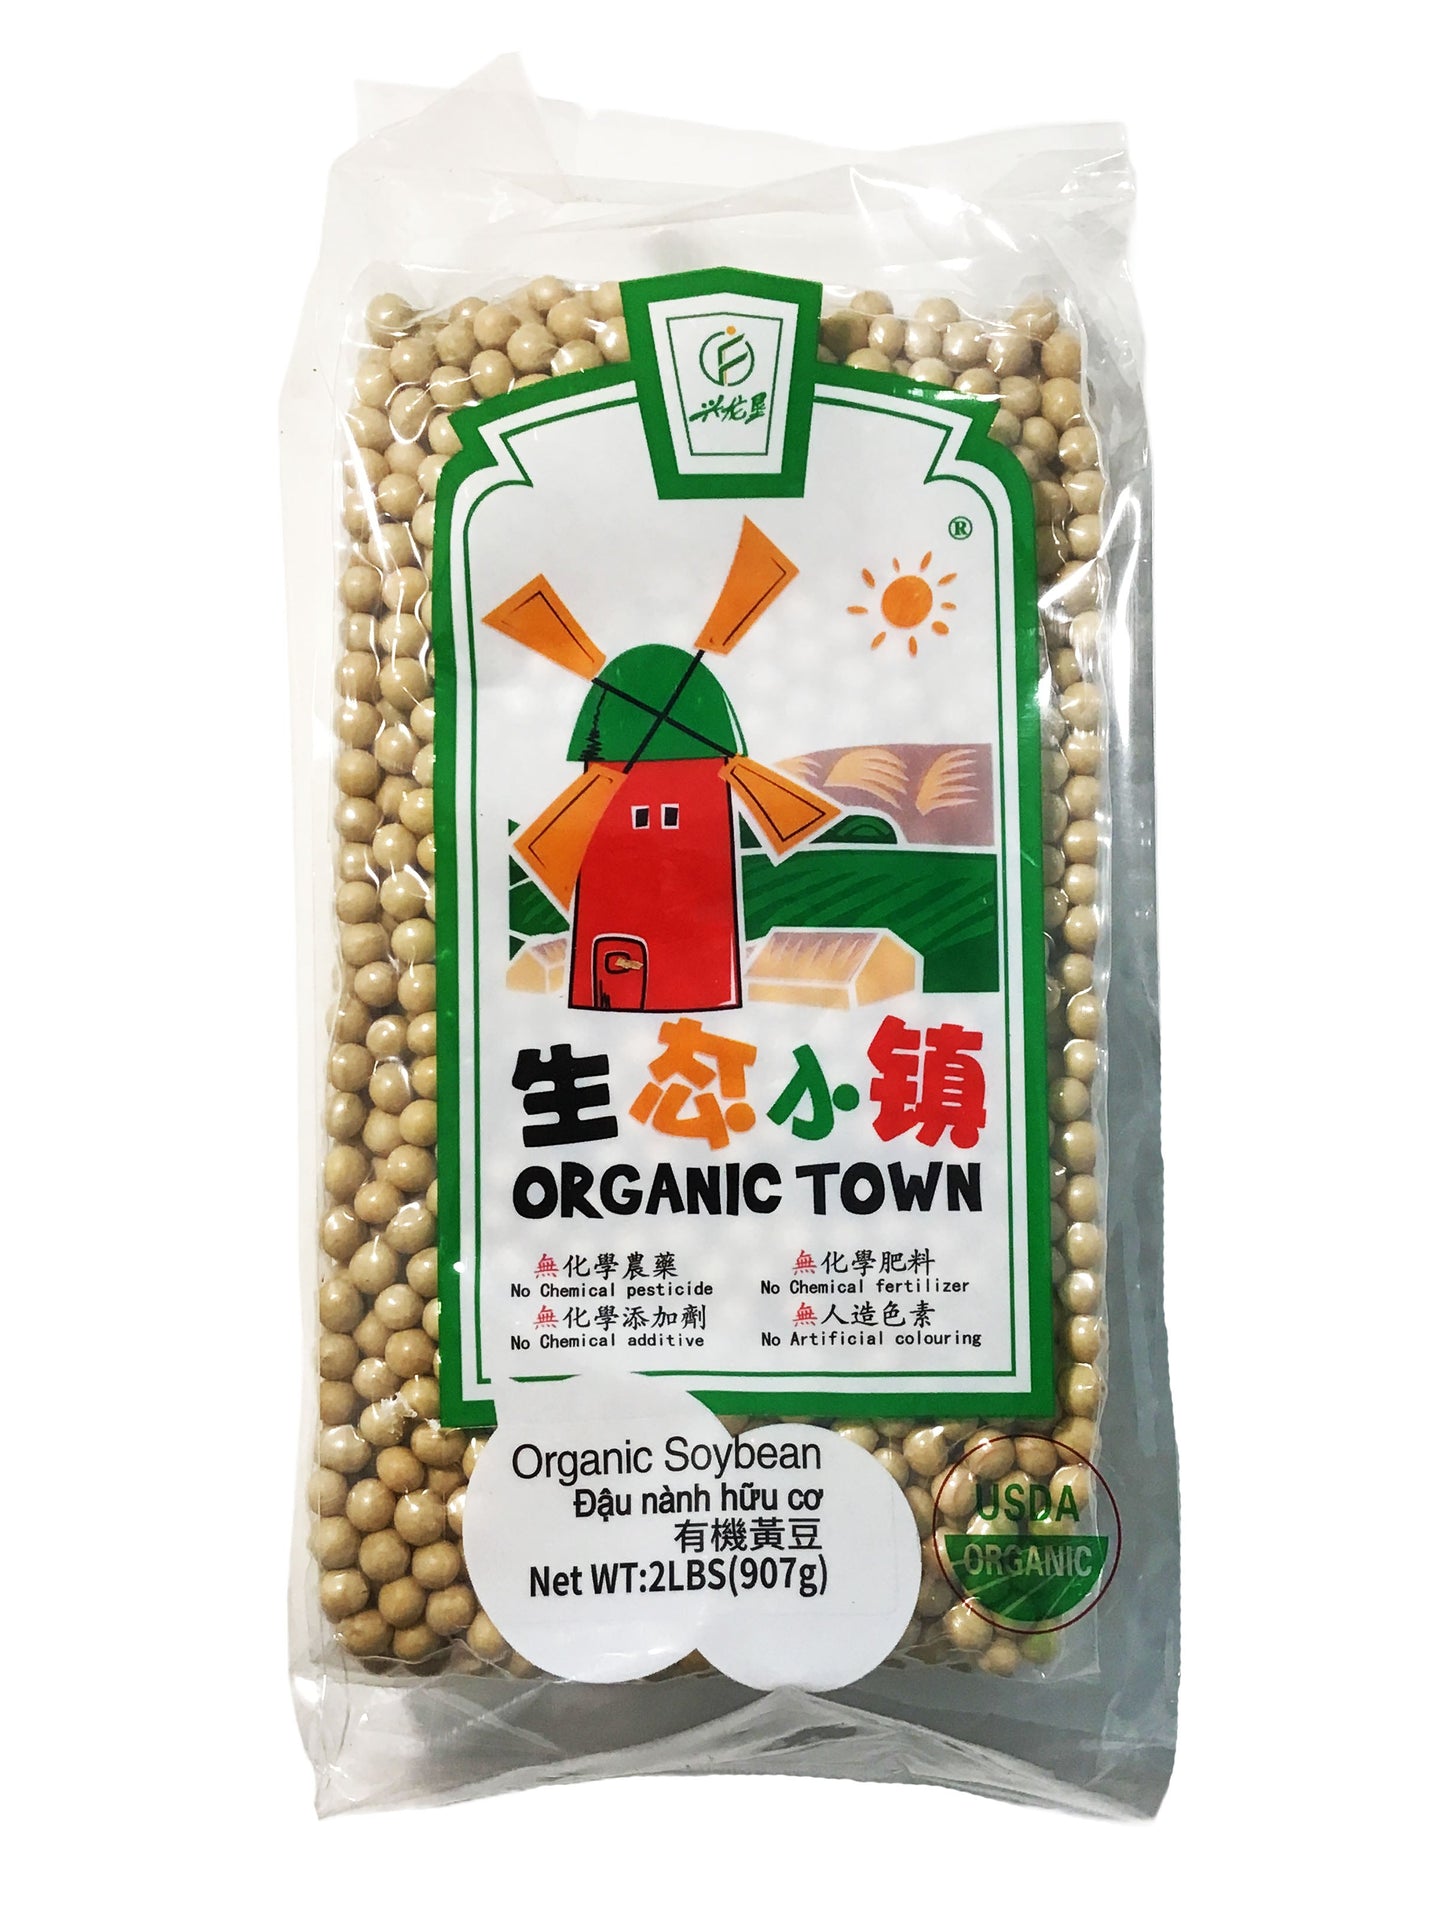 Organic Town Organic Soybean 2 lb 兴龙垦 生态小镇 有机黄豆